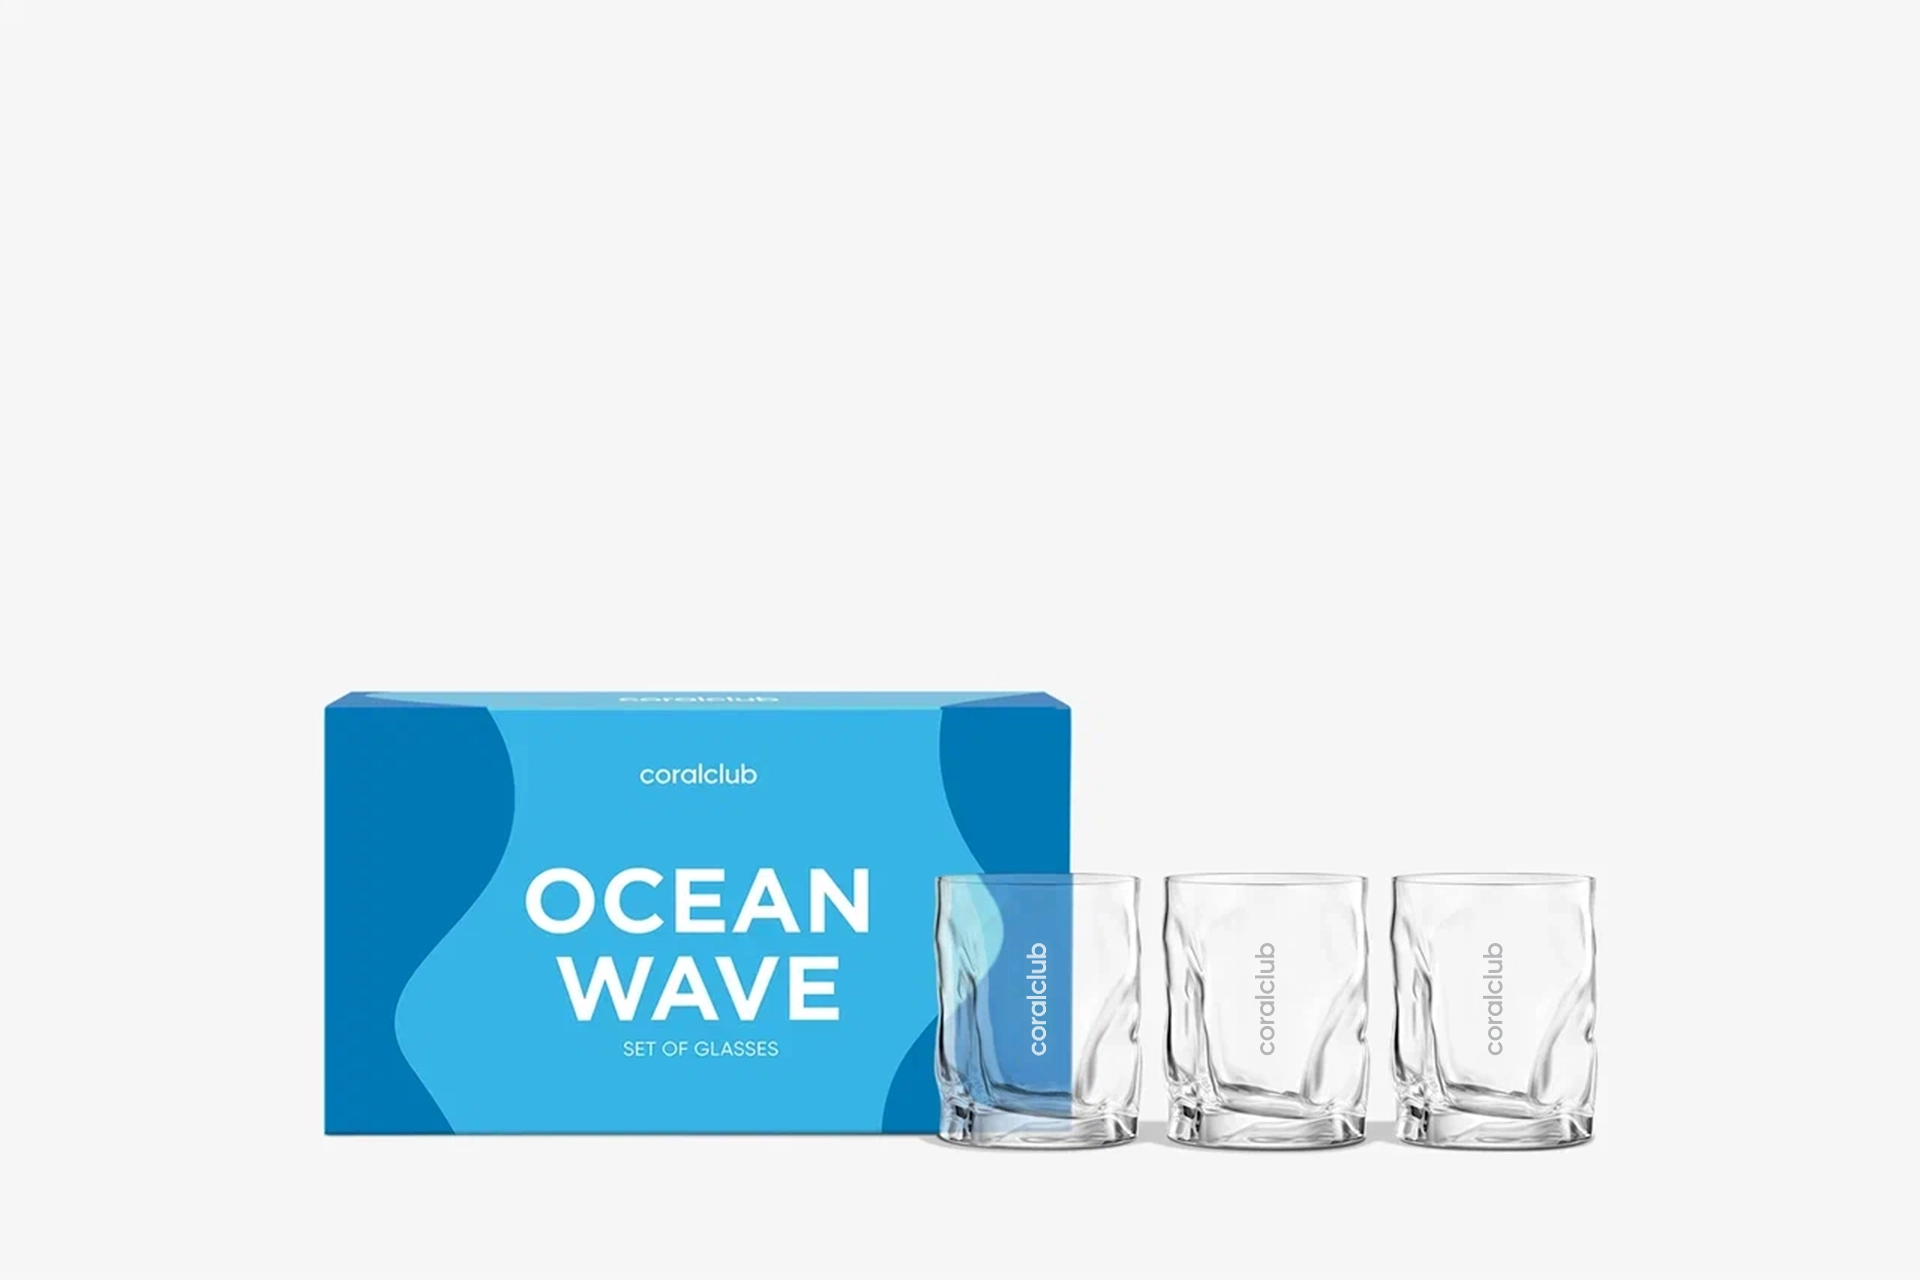 OCEAN WAVE glass set